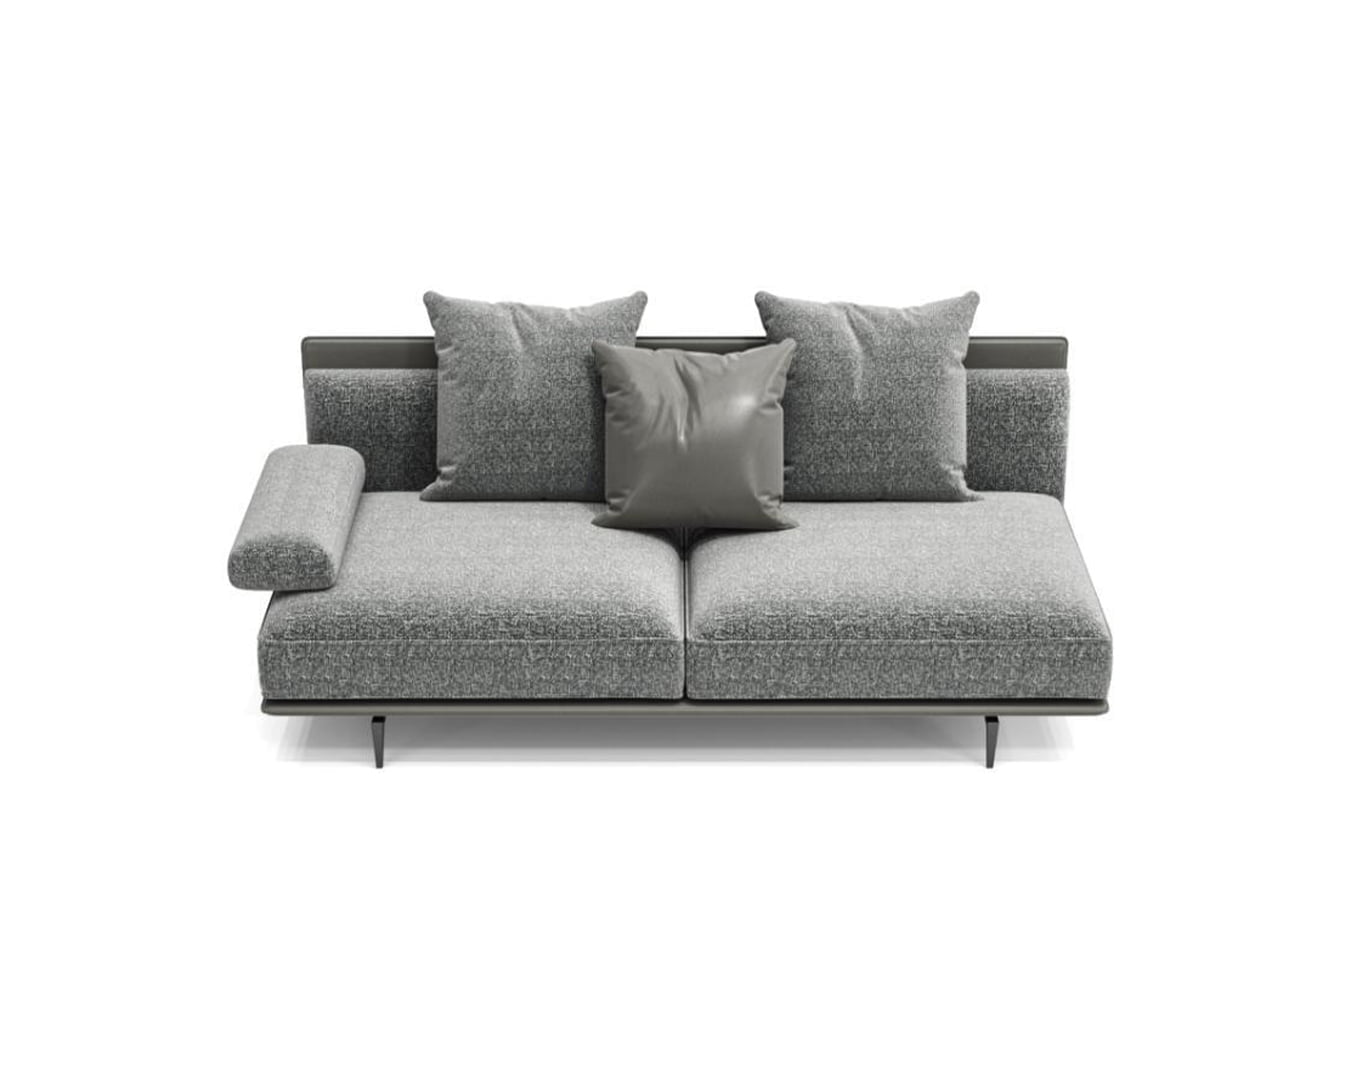 Sofa modern minimalis set grey 2 seats left